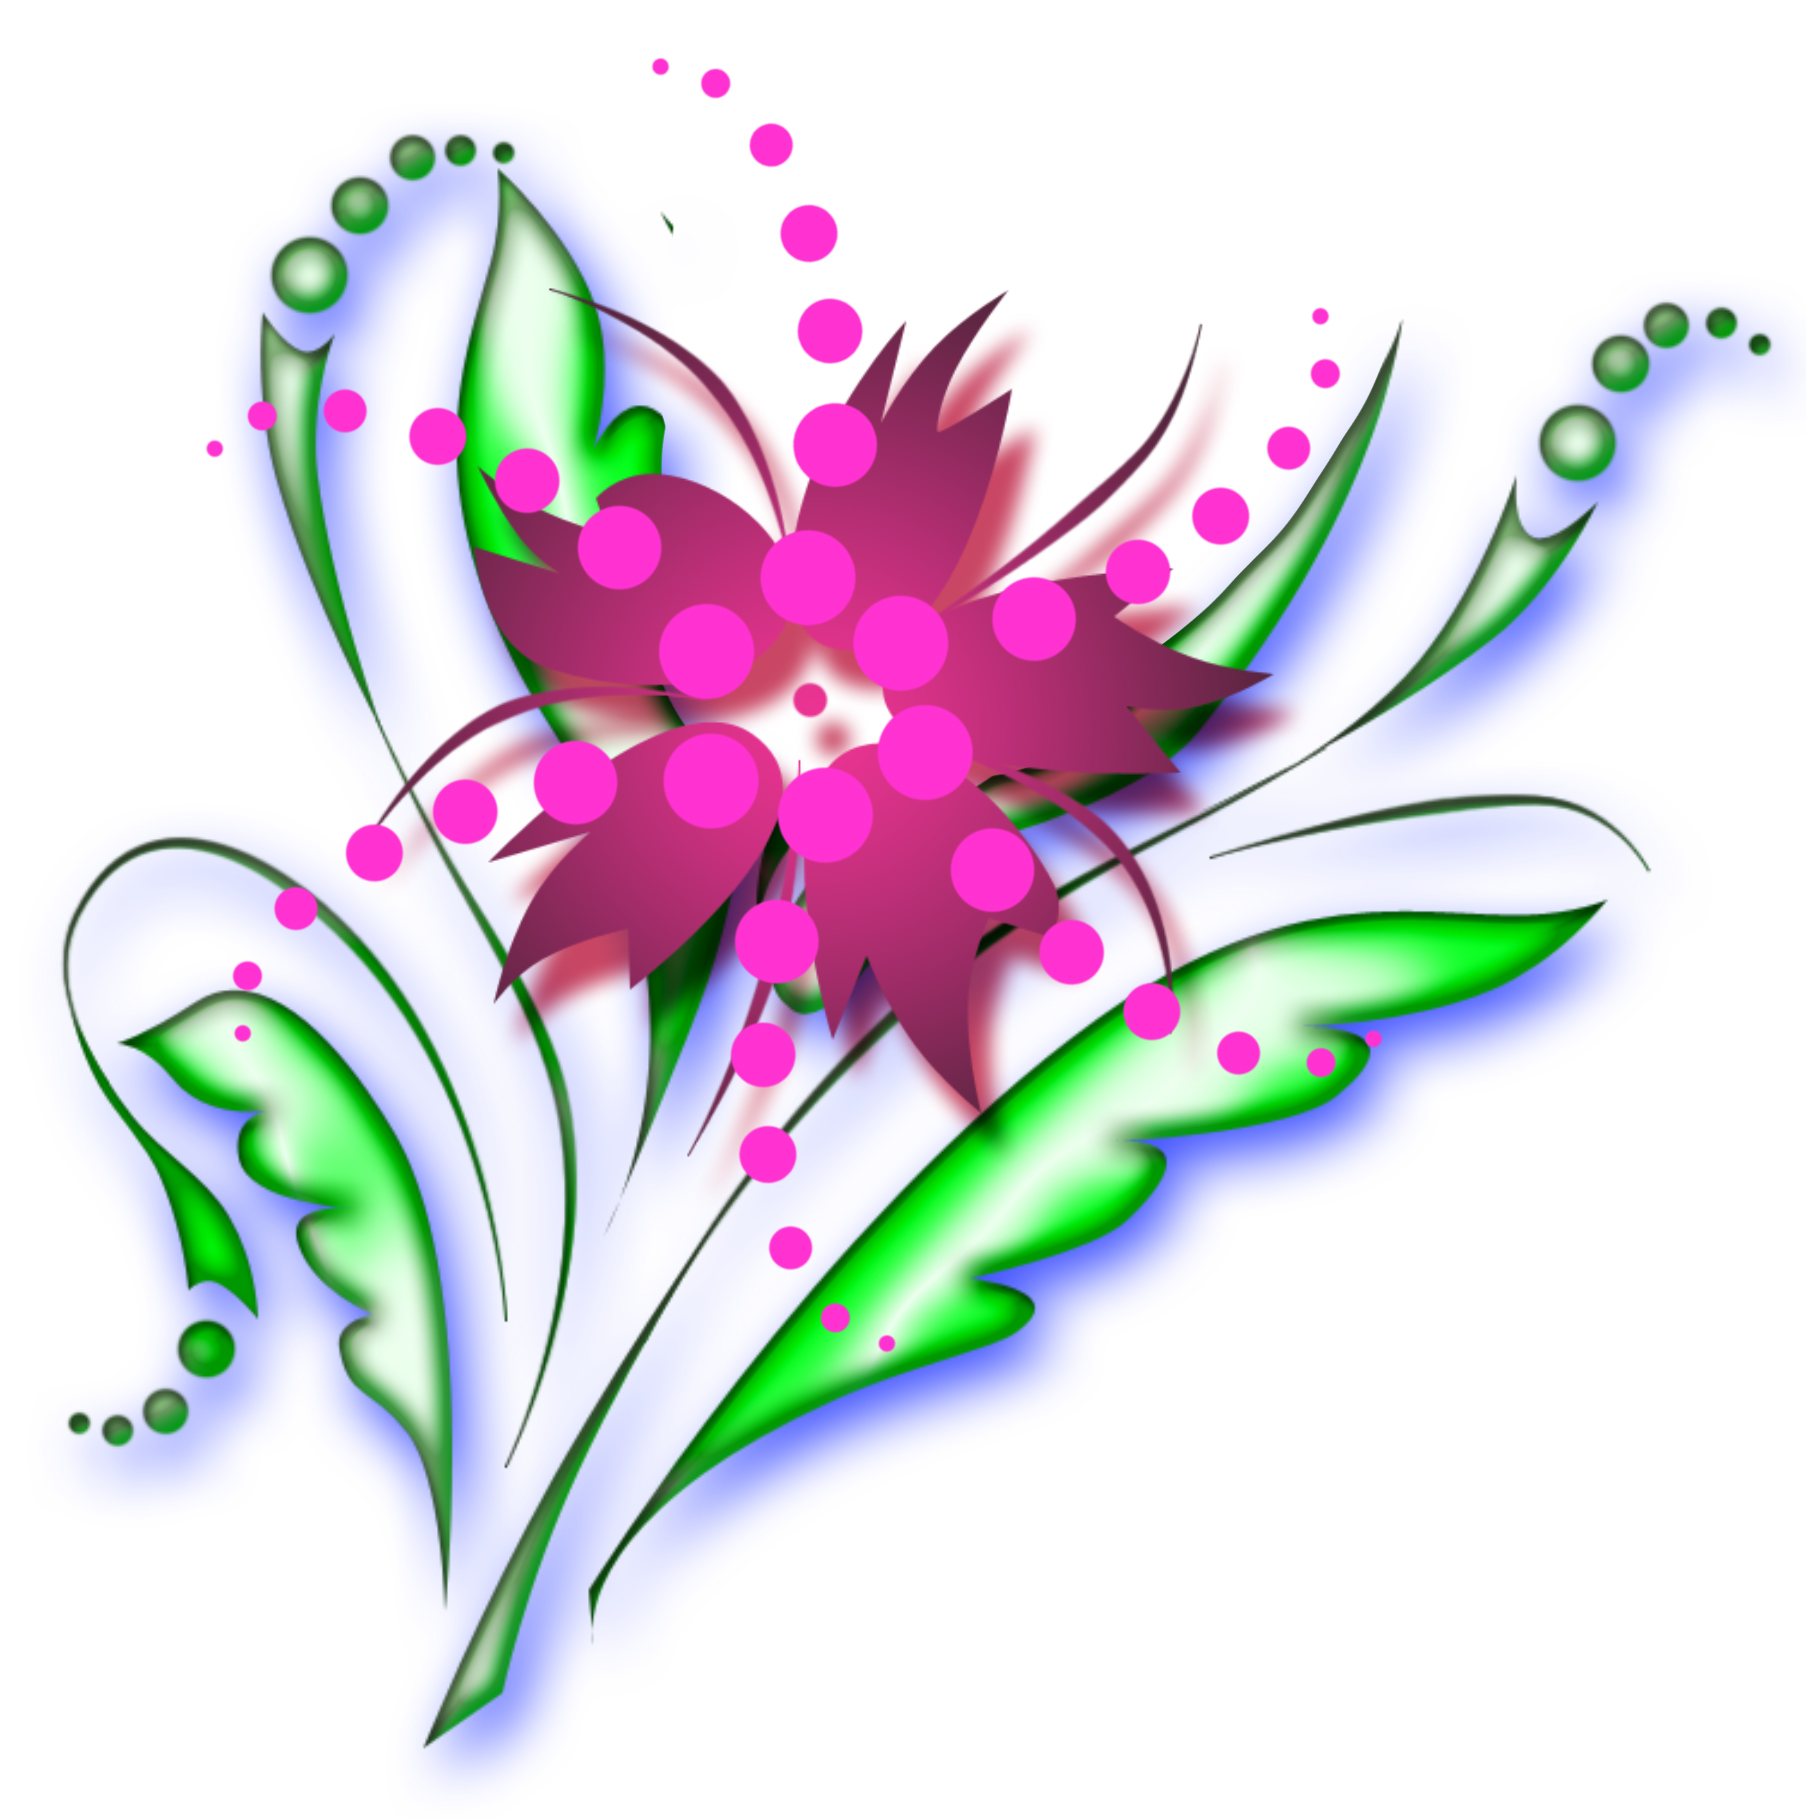 Spiral flower tattoo design - ClipArt Best - ClipArt Best